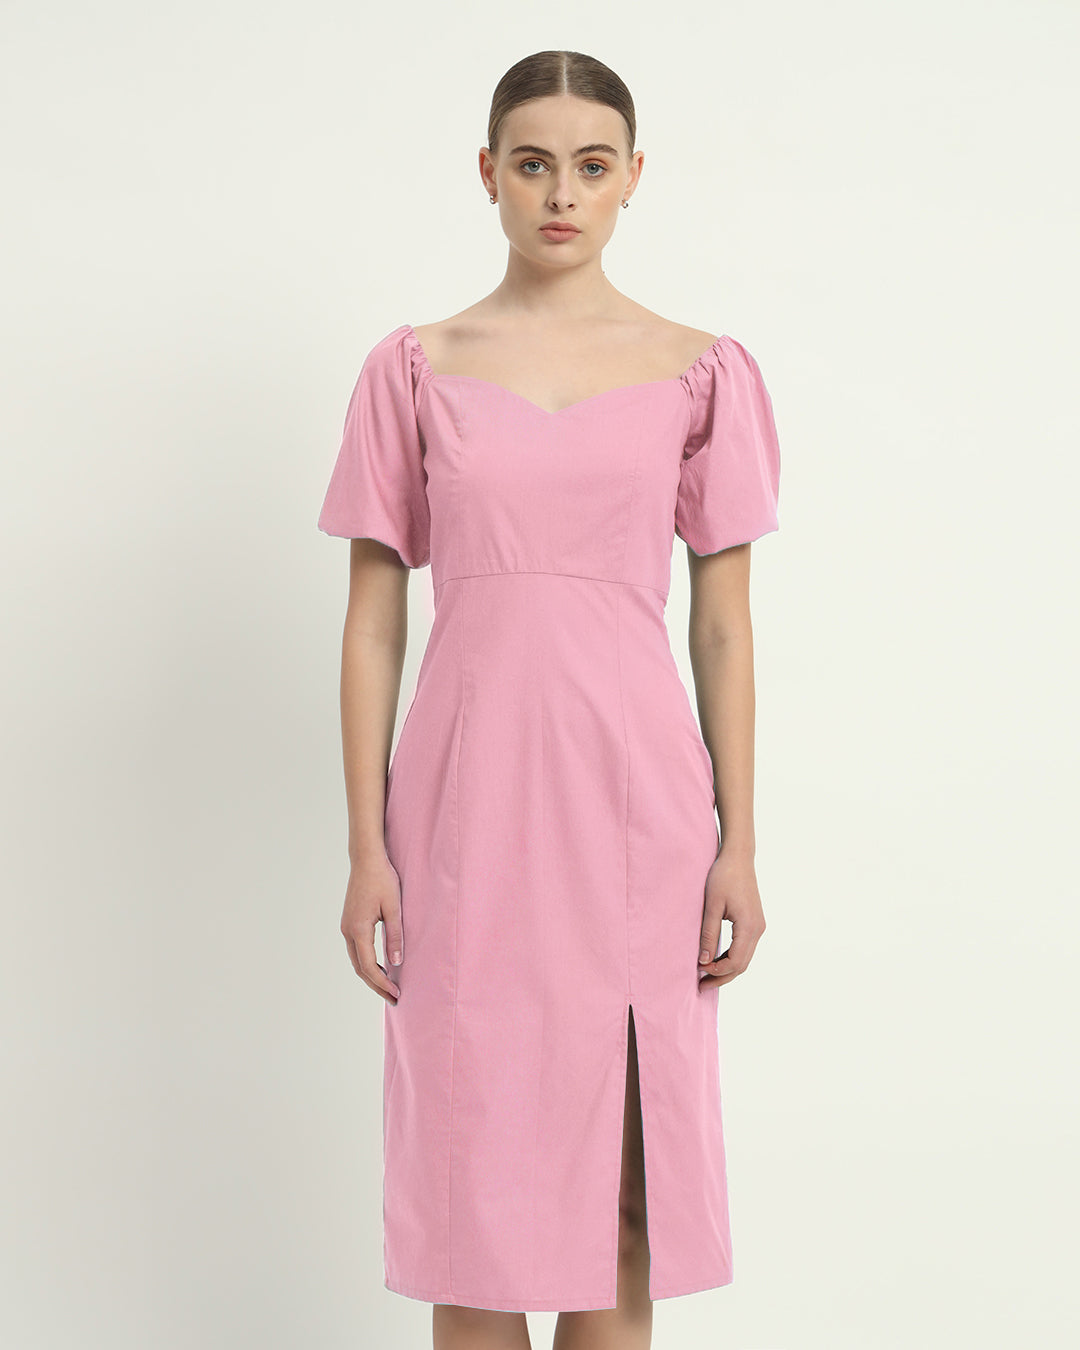 The Erwin Fondant Pink Cotton Dress